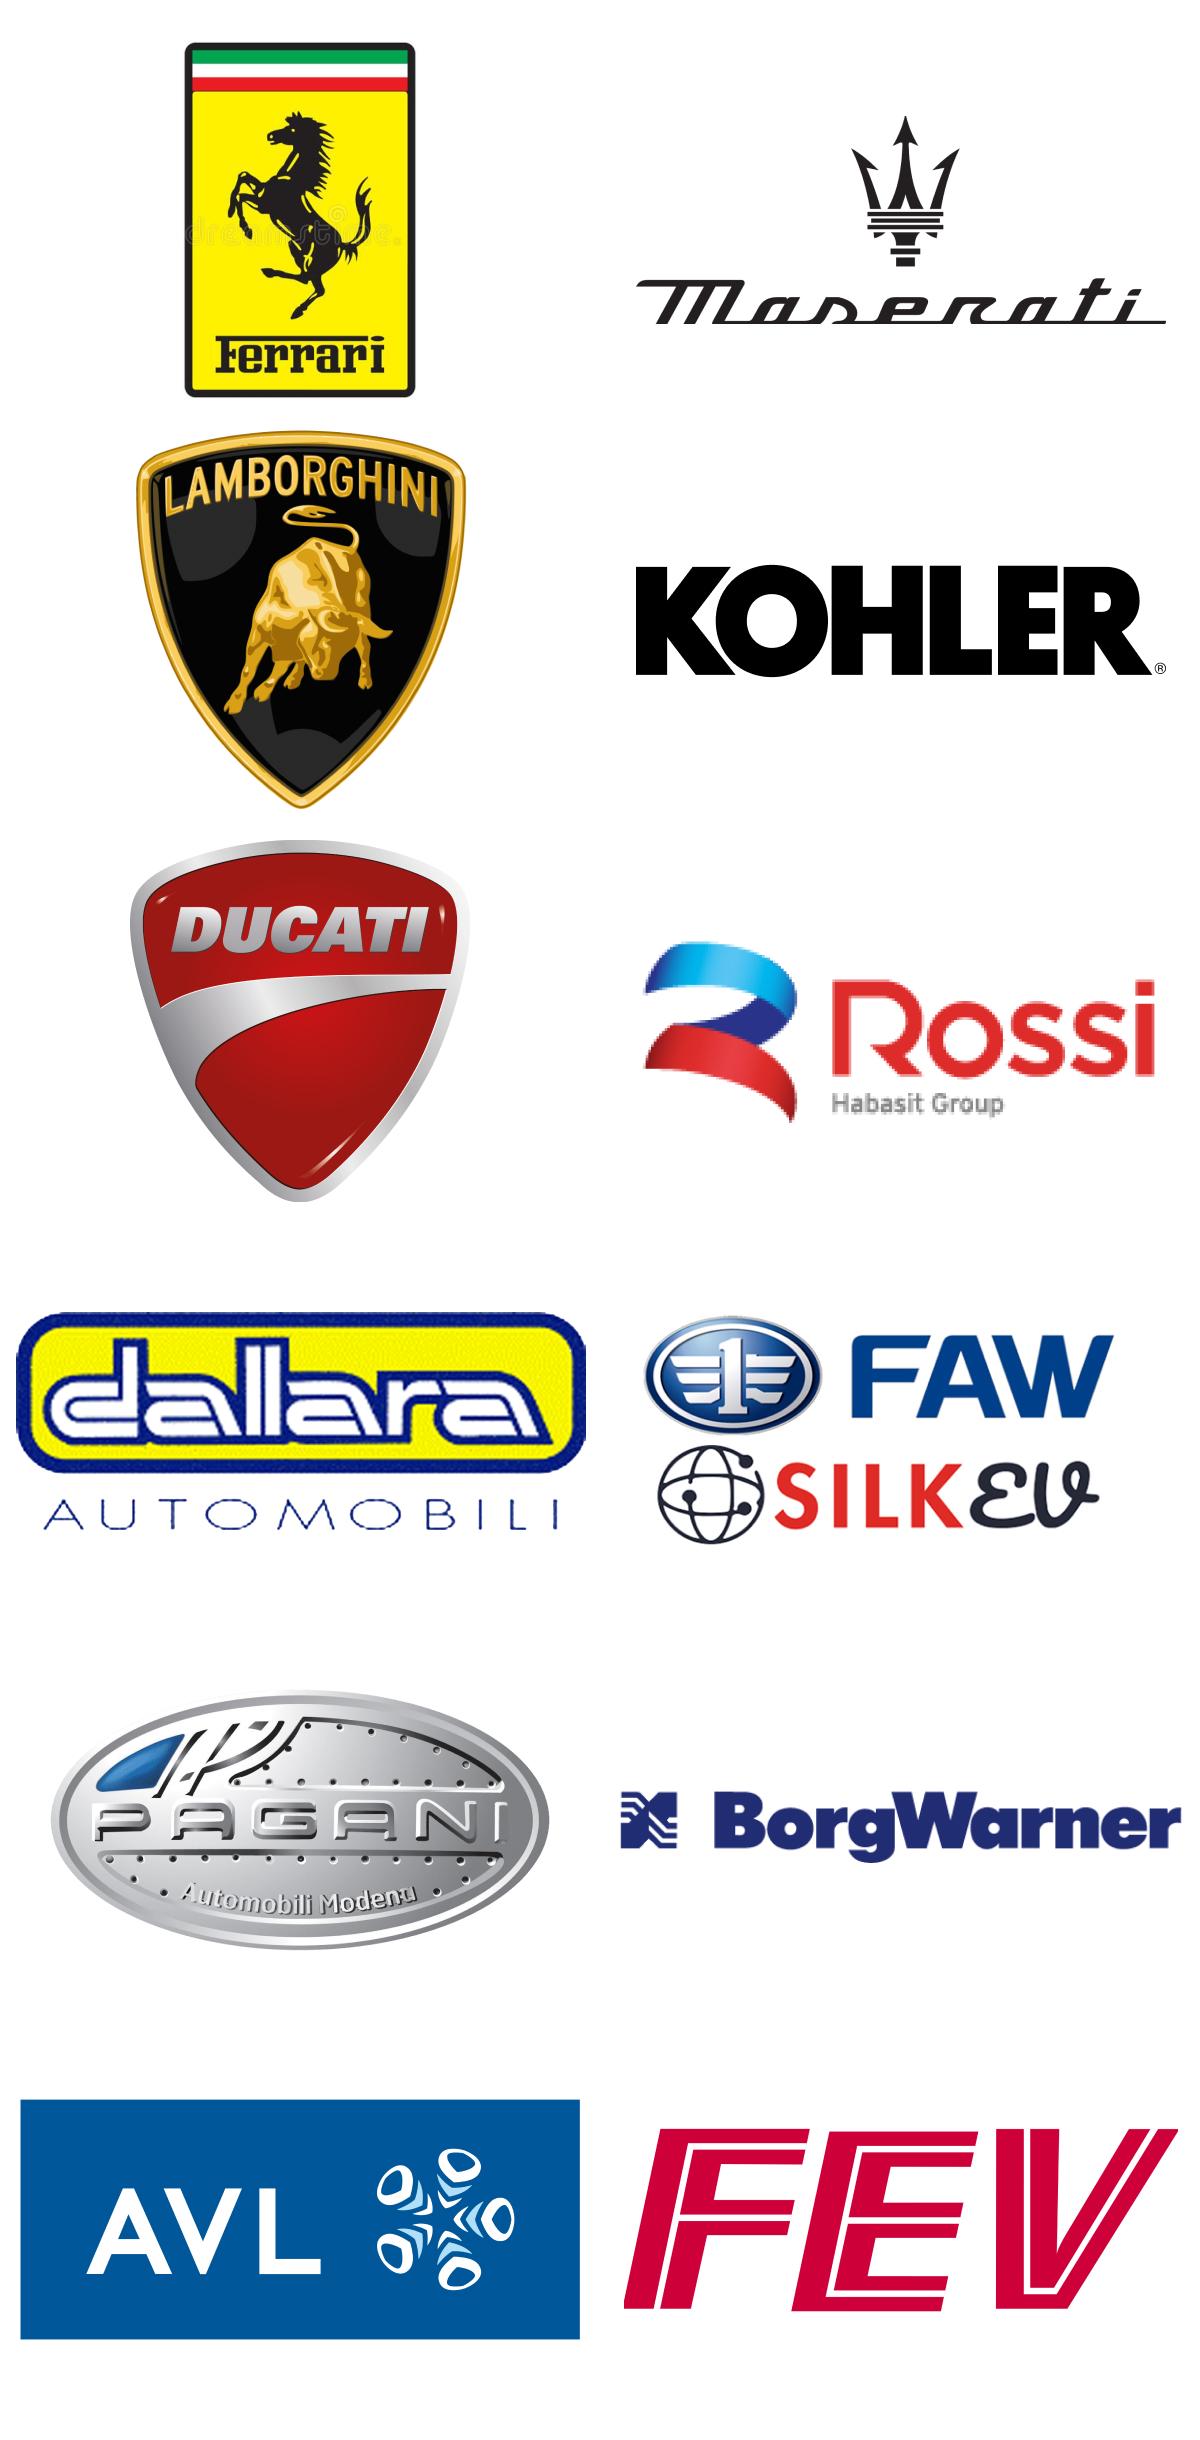 Immagini top brand mechanical colonna 1: Ferrari, Maserati, Lamborghini, Kohler, Ducati, Rossi, Dallara, FAW, Pagani, BorgWarner, AVL, FEV.